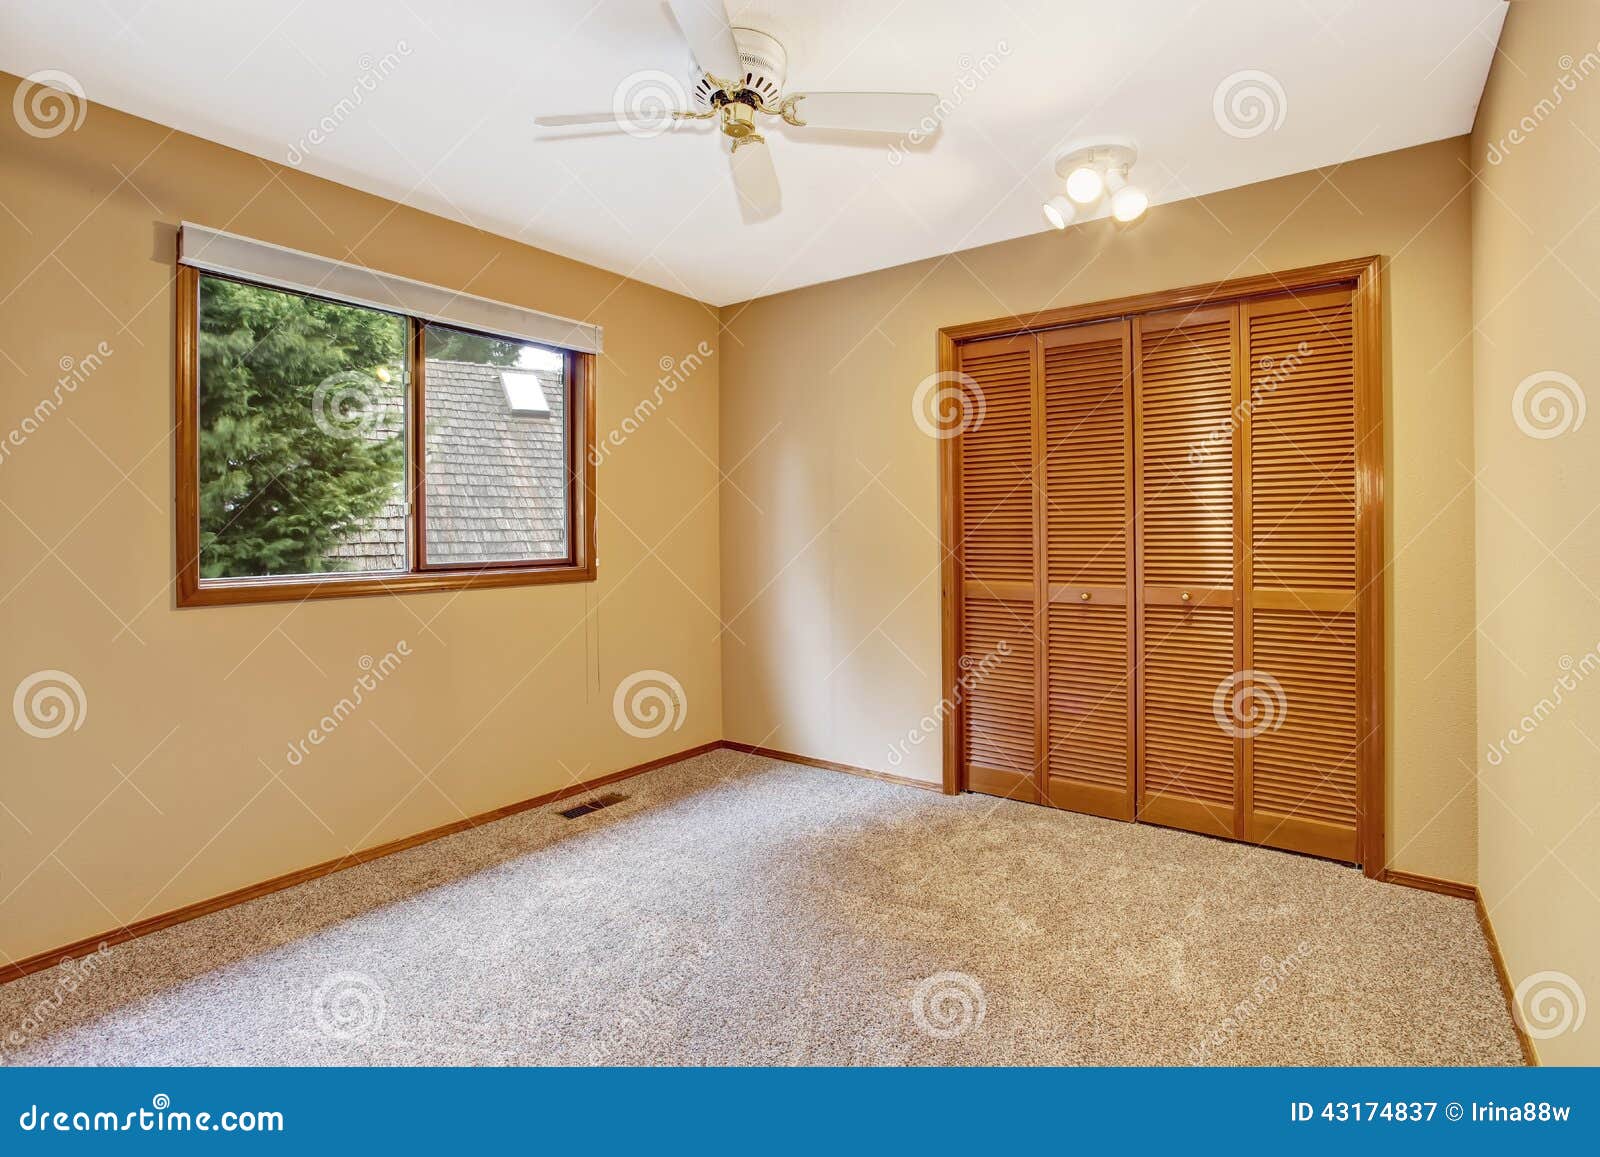 Empty Bedroom Interior In Soft Peach Color Stock Image